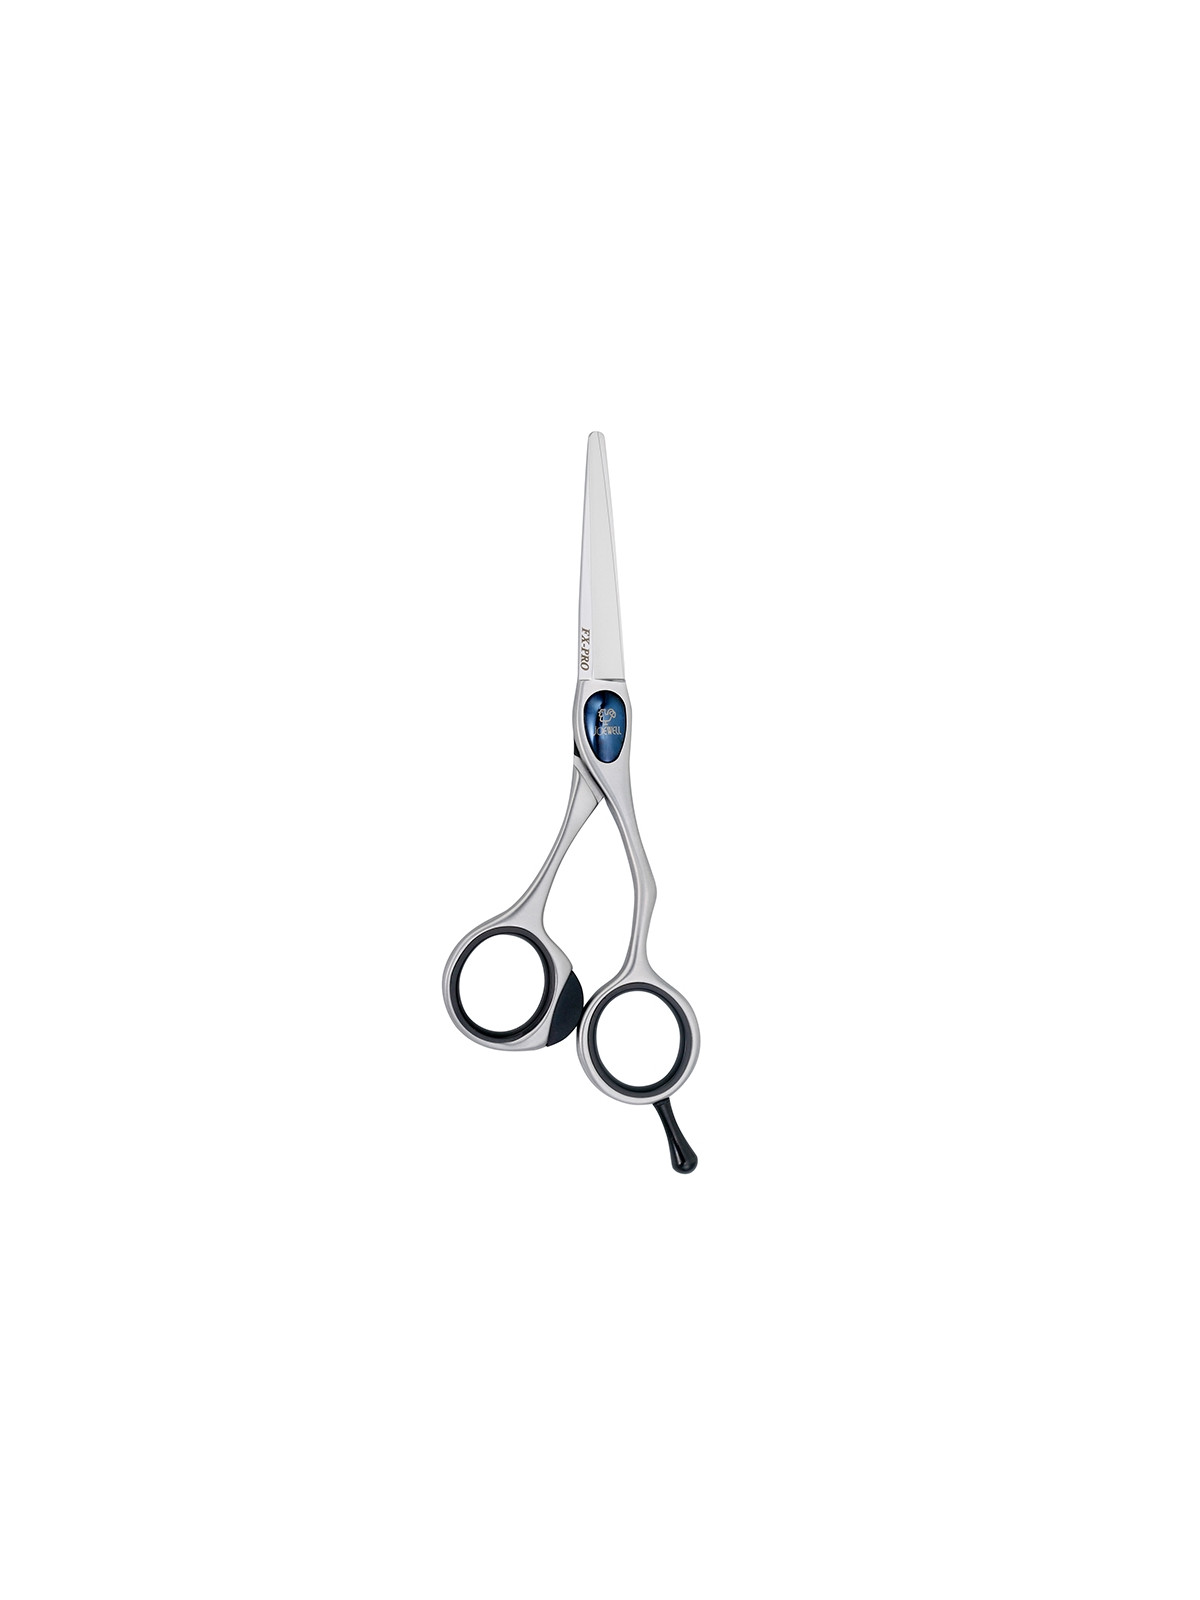 Joewell FX Pro cutting scissors